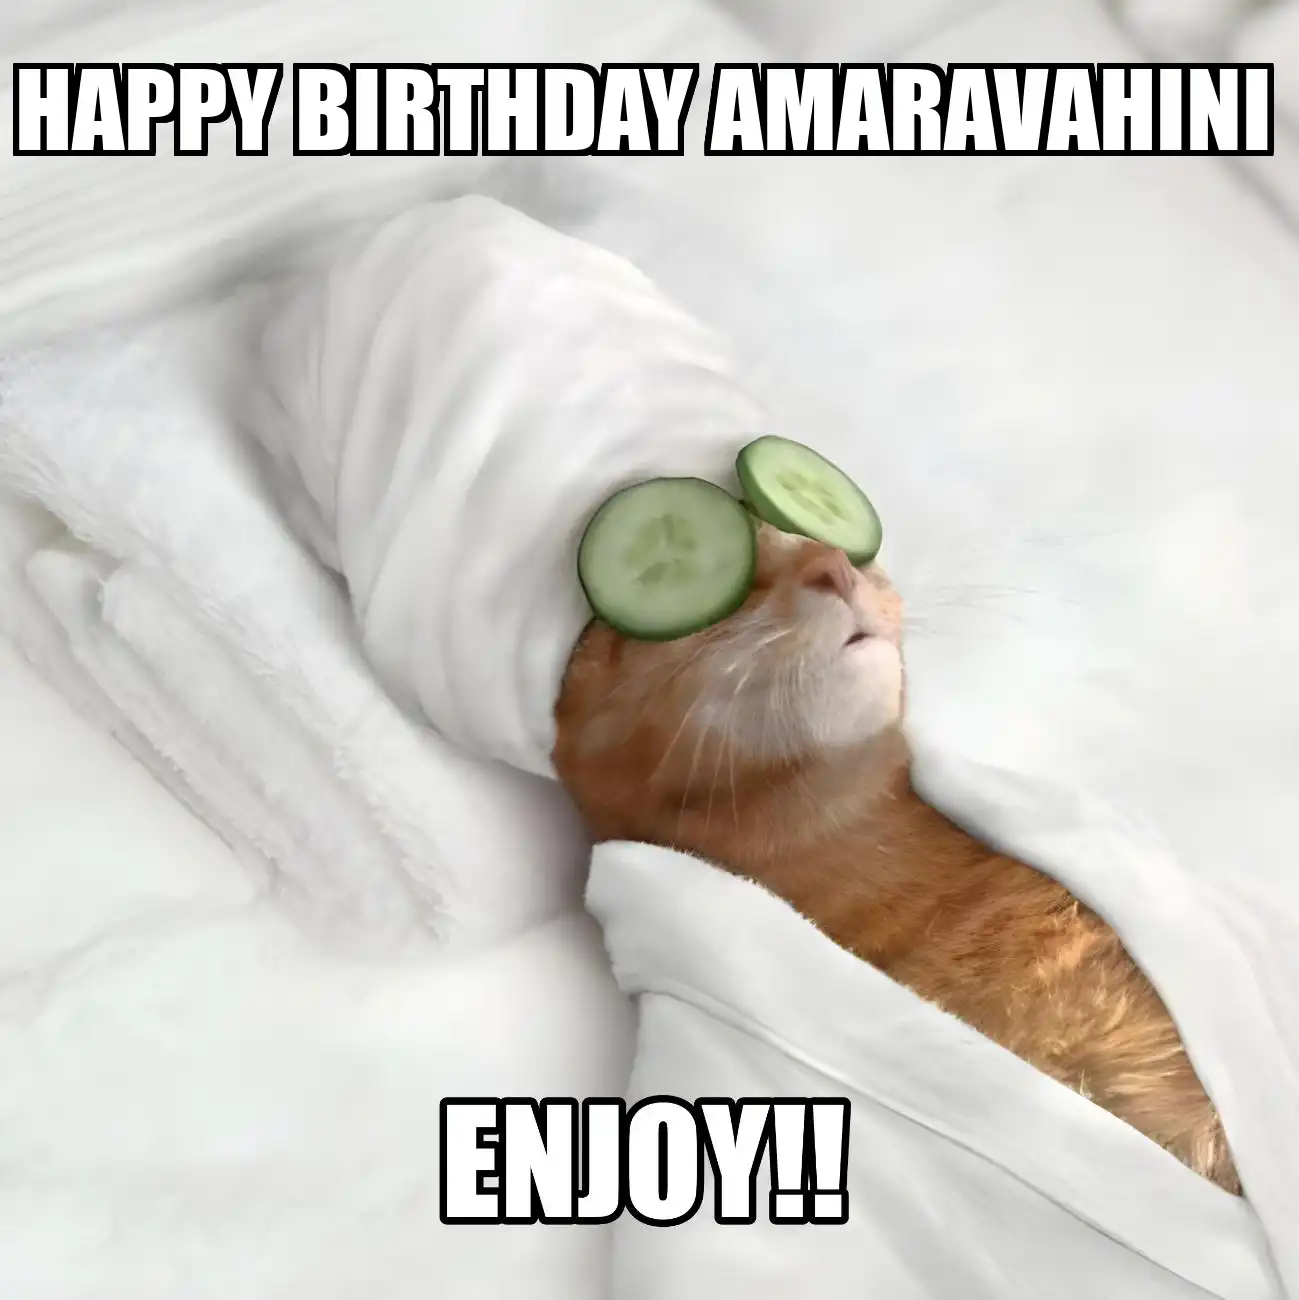 Happy Birthday Amaravahini Enjoy Cat Meme